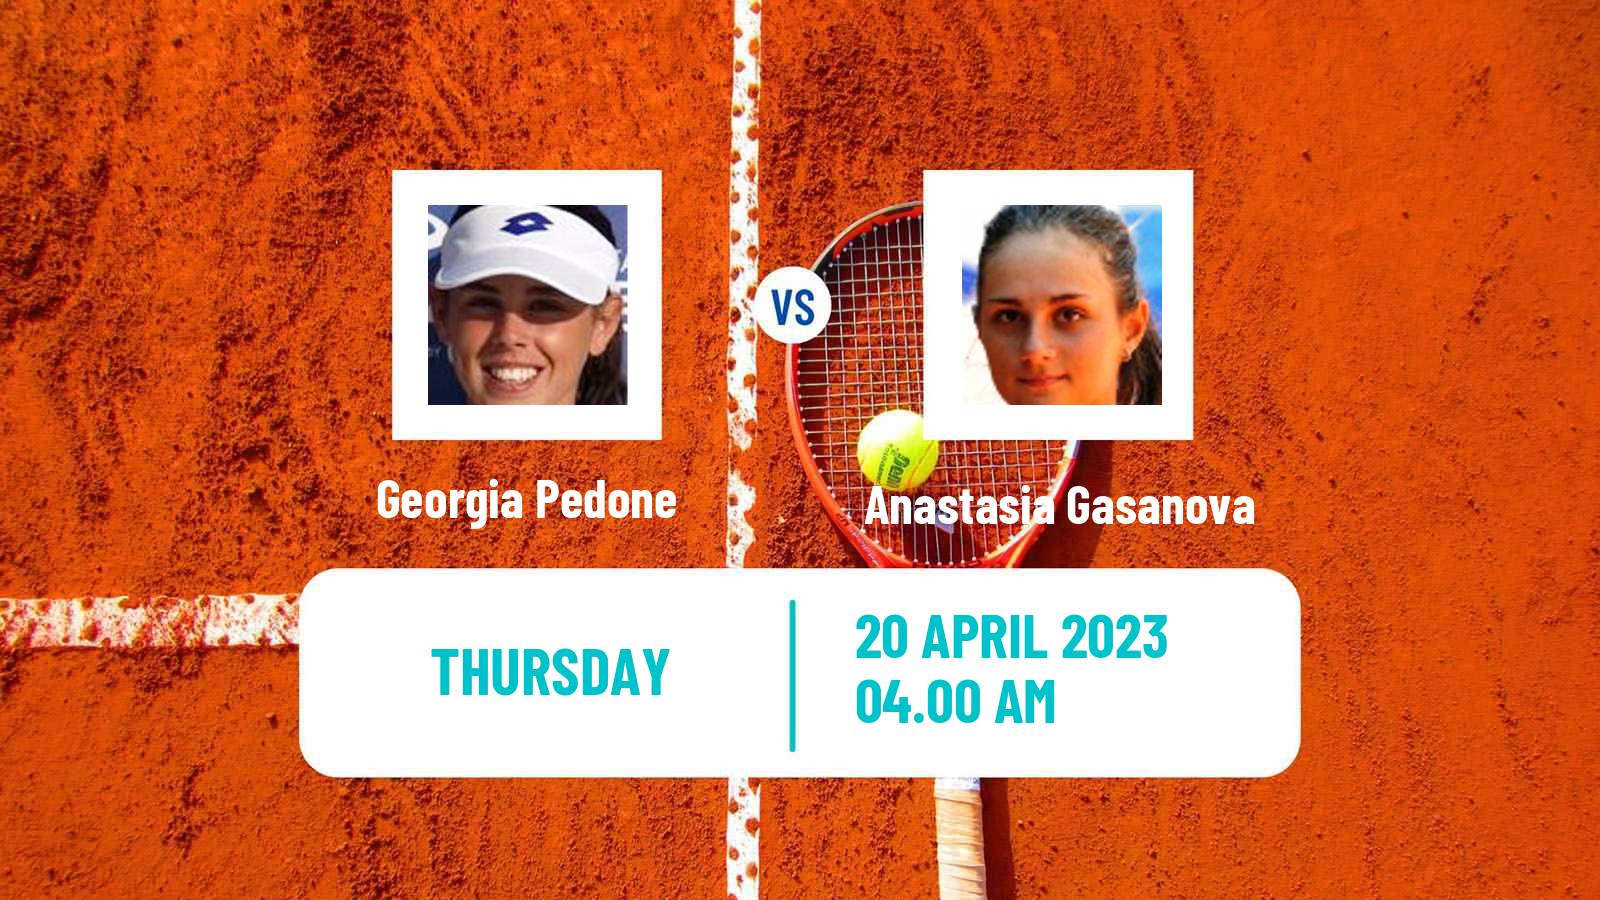 Tennis ITF Tournaments Georgia Pedone - Anastasia Gasanova